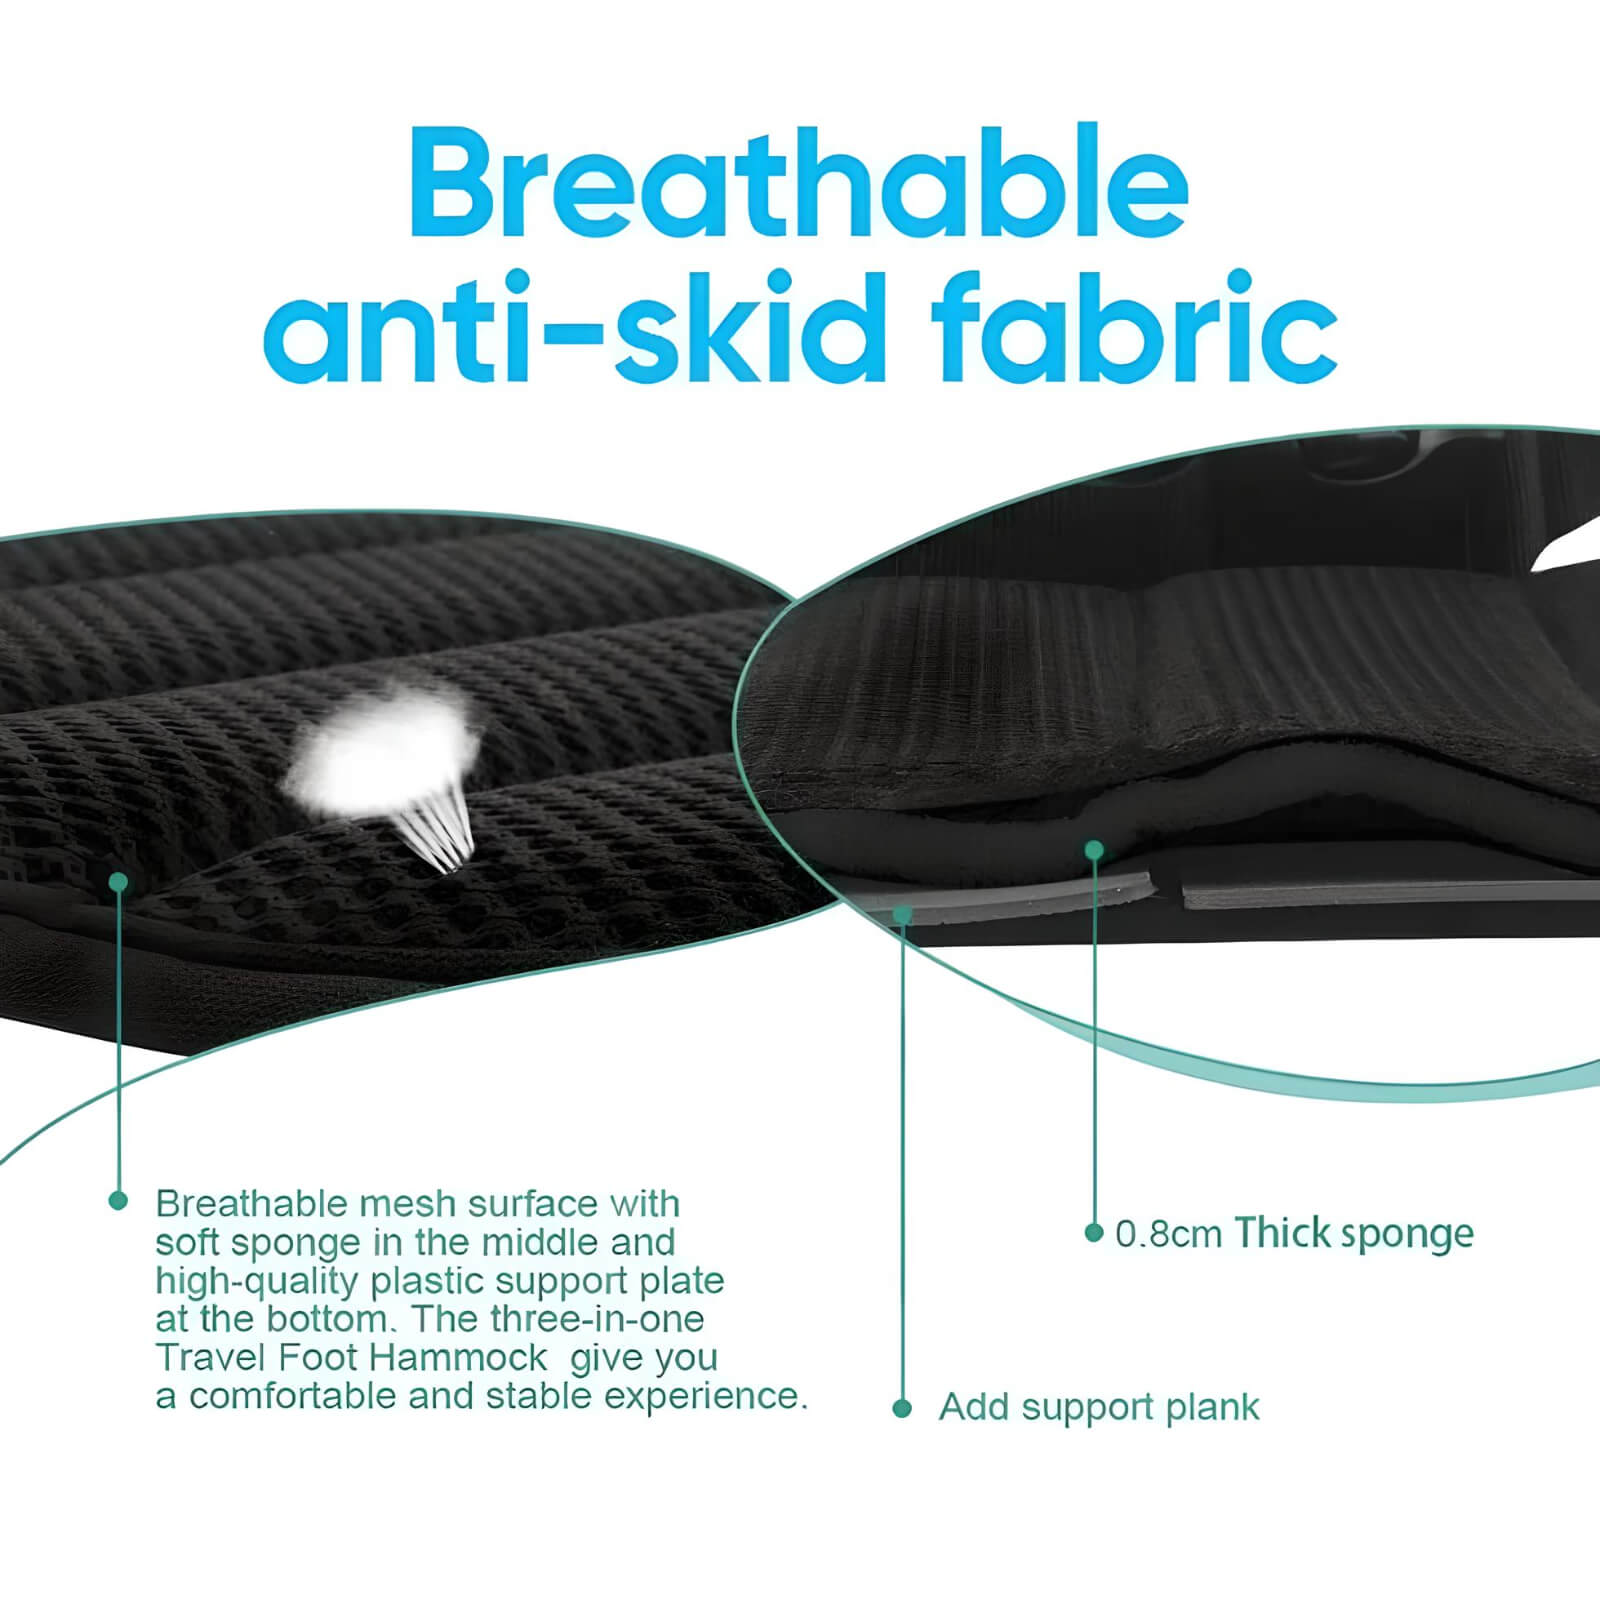 office-foot-hammock-breathable-anti-skid-fabric